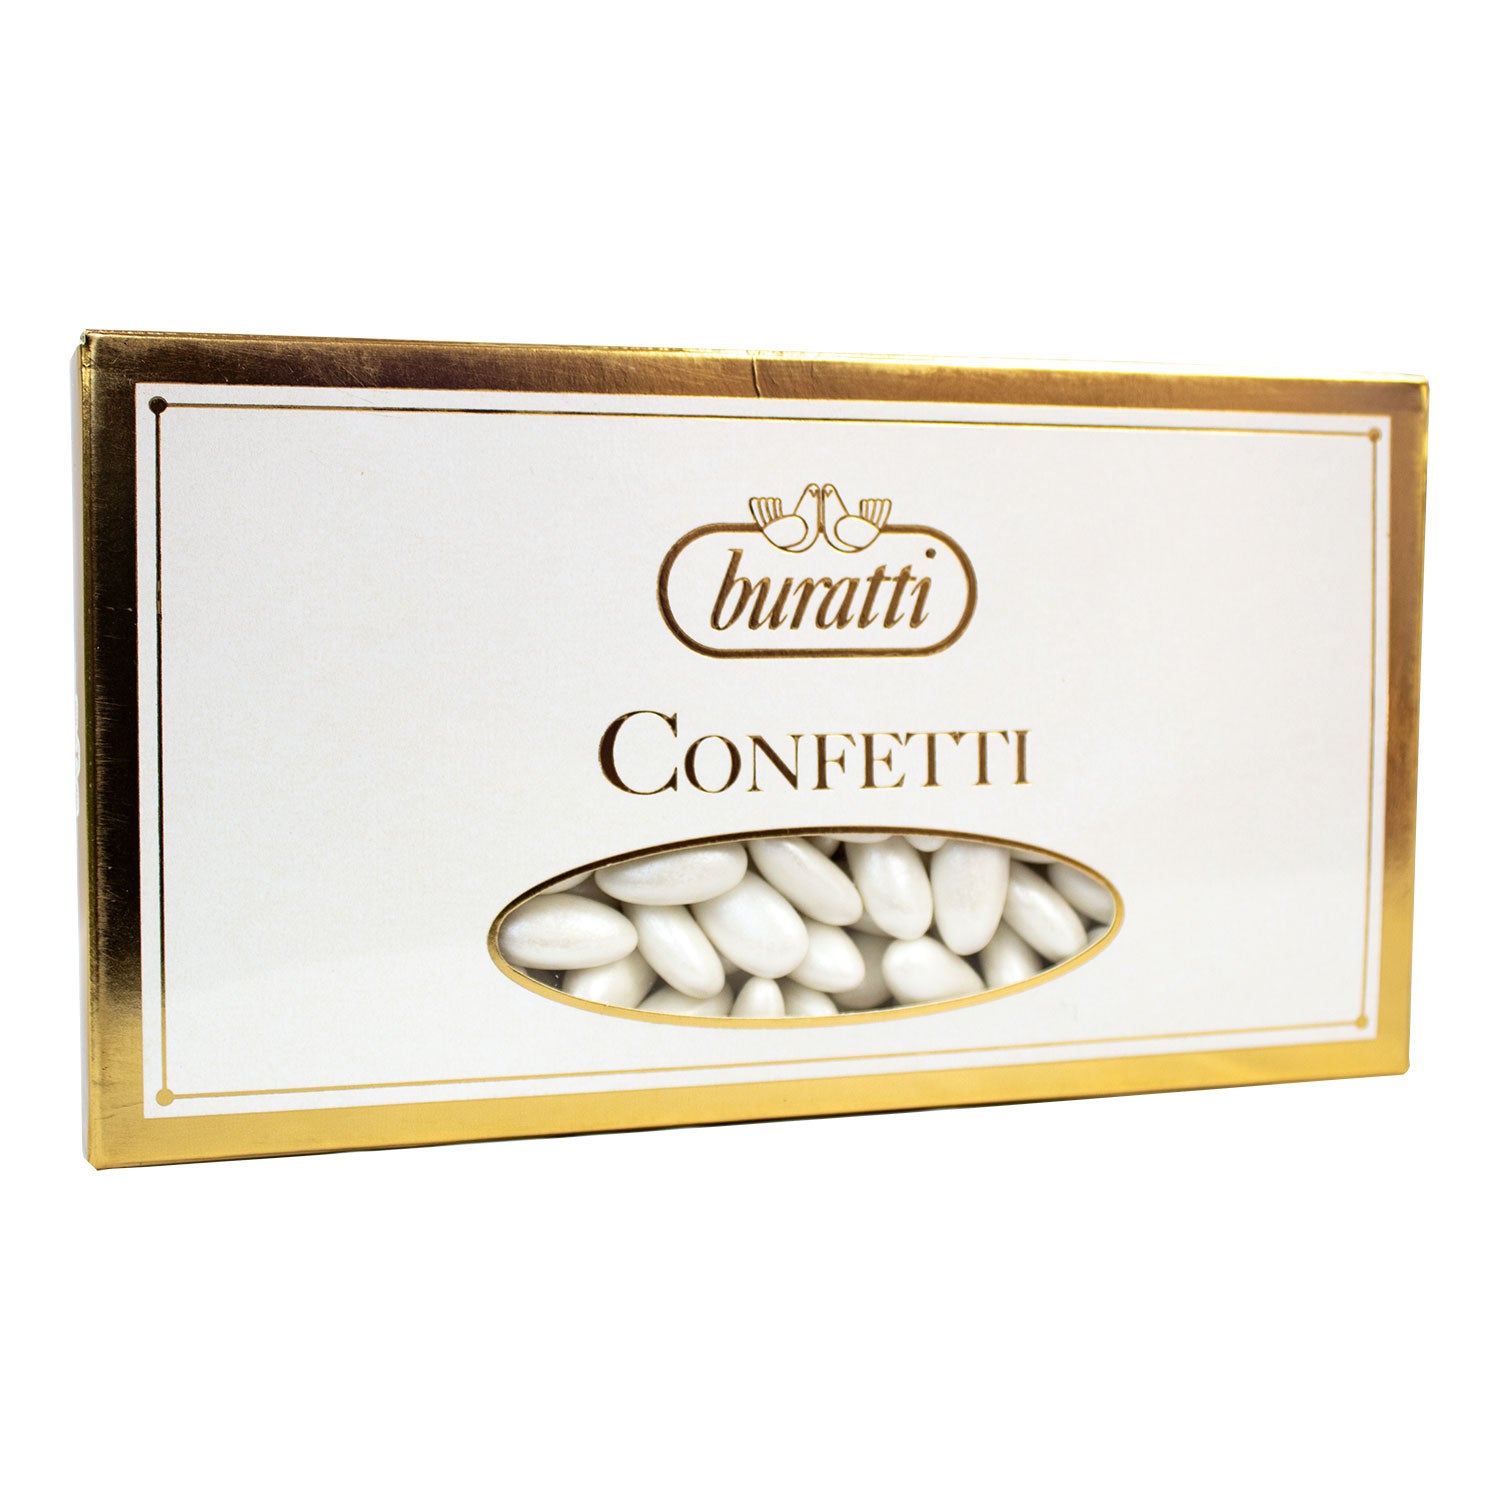 Confetti Buratti Mandorla Bianchi senza Glutine 1 kg